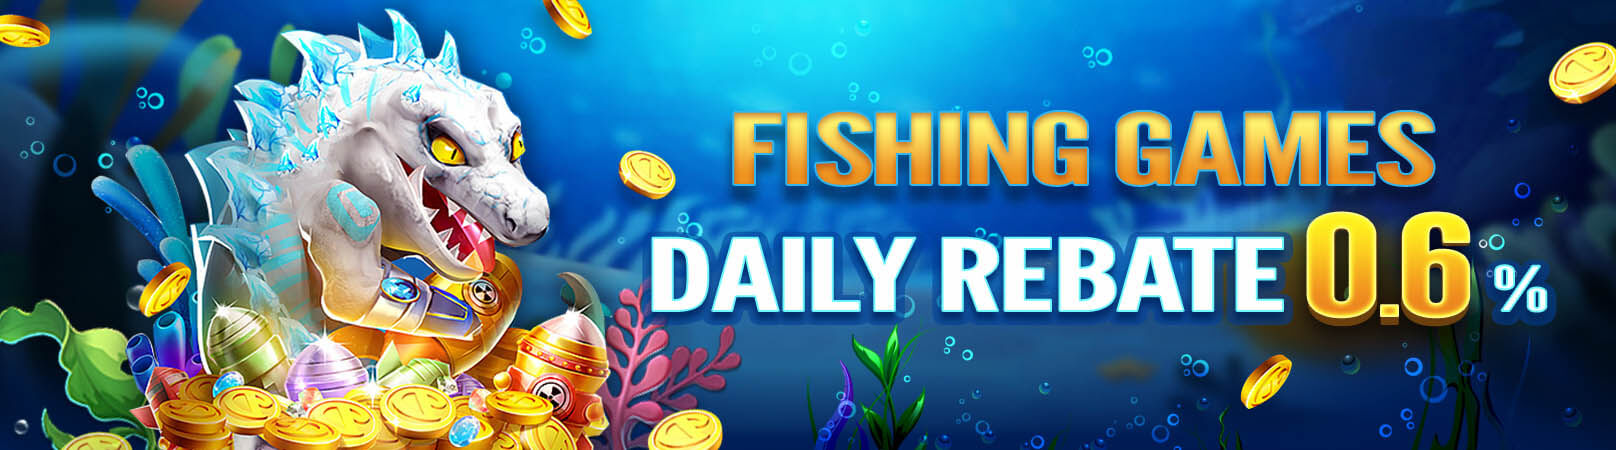 7XM - FISHING GAMES DAILY REBATE 0.6%